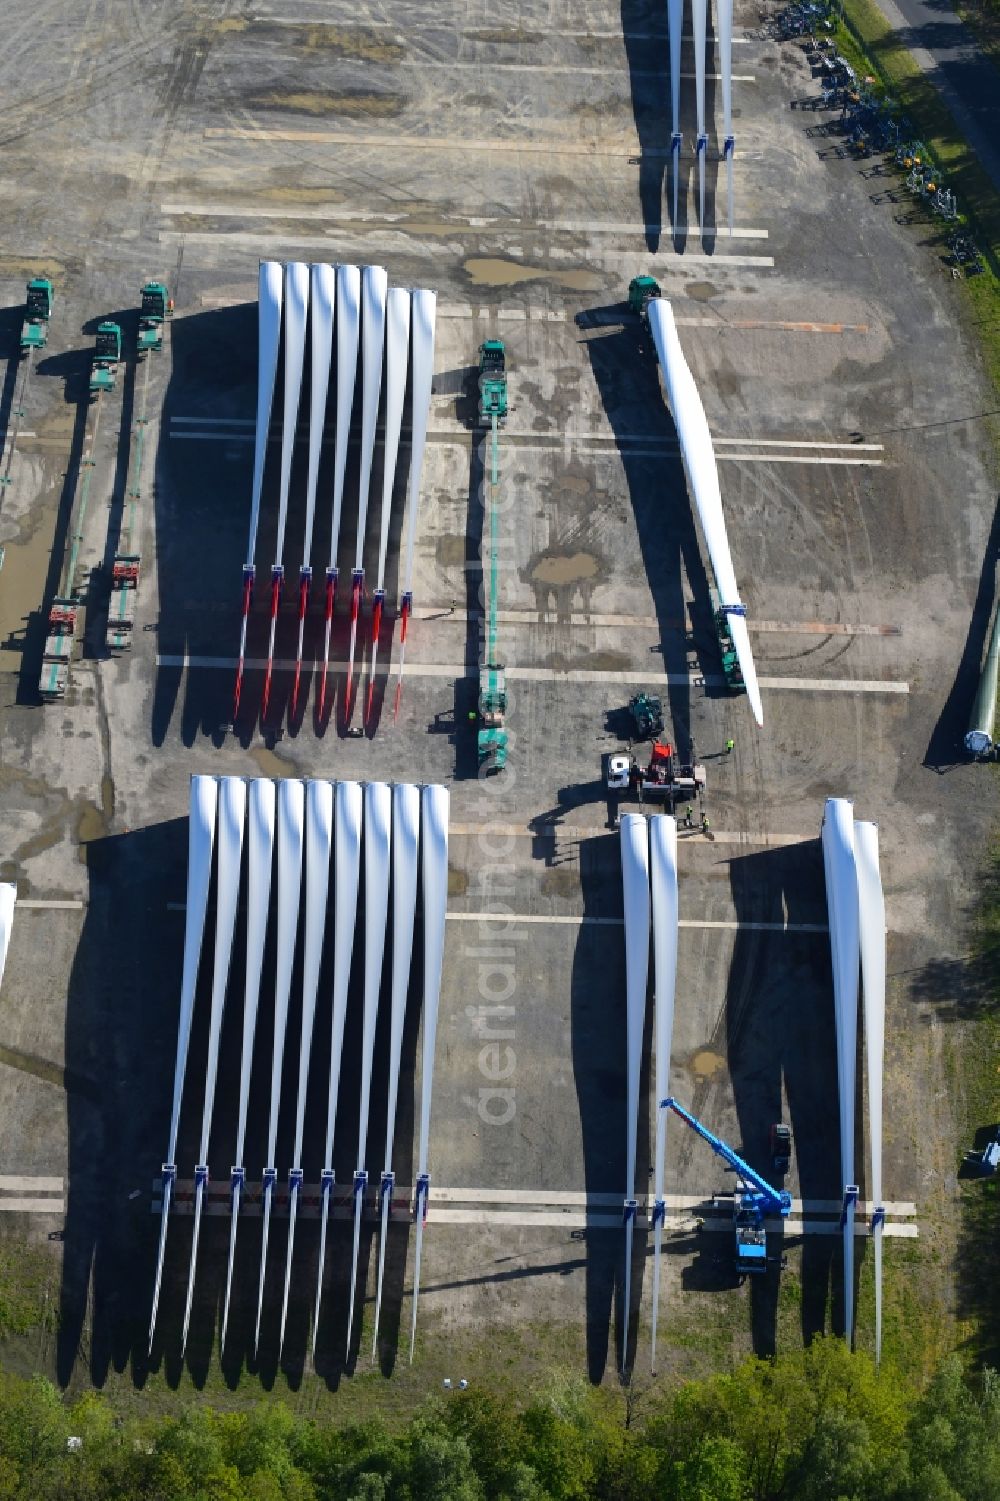 Aerial photograph Lauchhammer - Building and production halls on the premises of Vestas Deutschland GmbH on John-Schehr-Strasse in Lauchhammer in the state Brandenburg, Germany